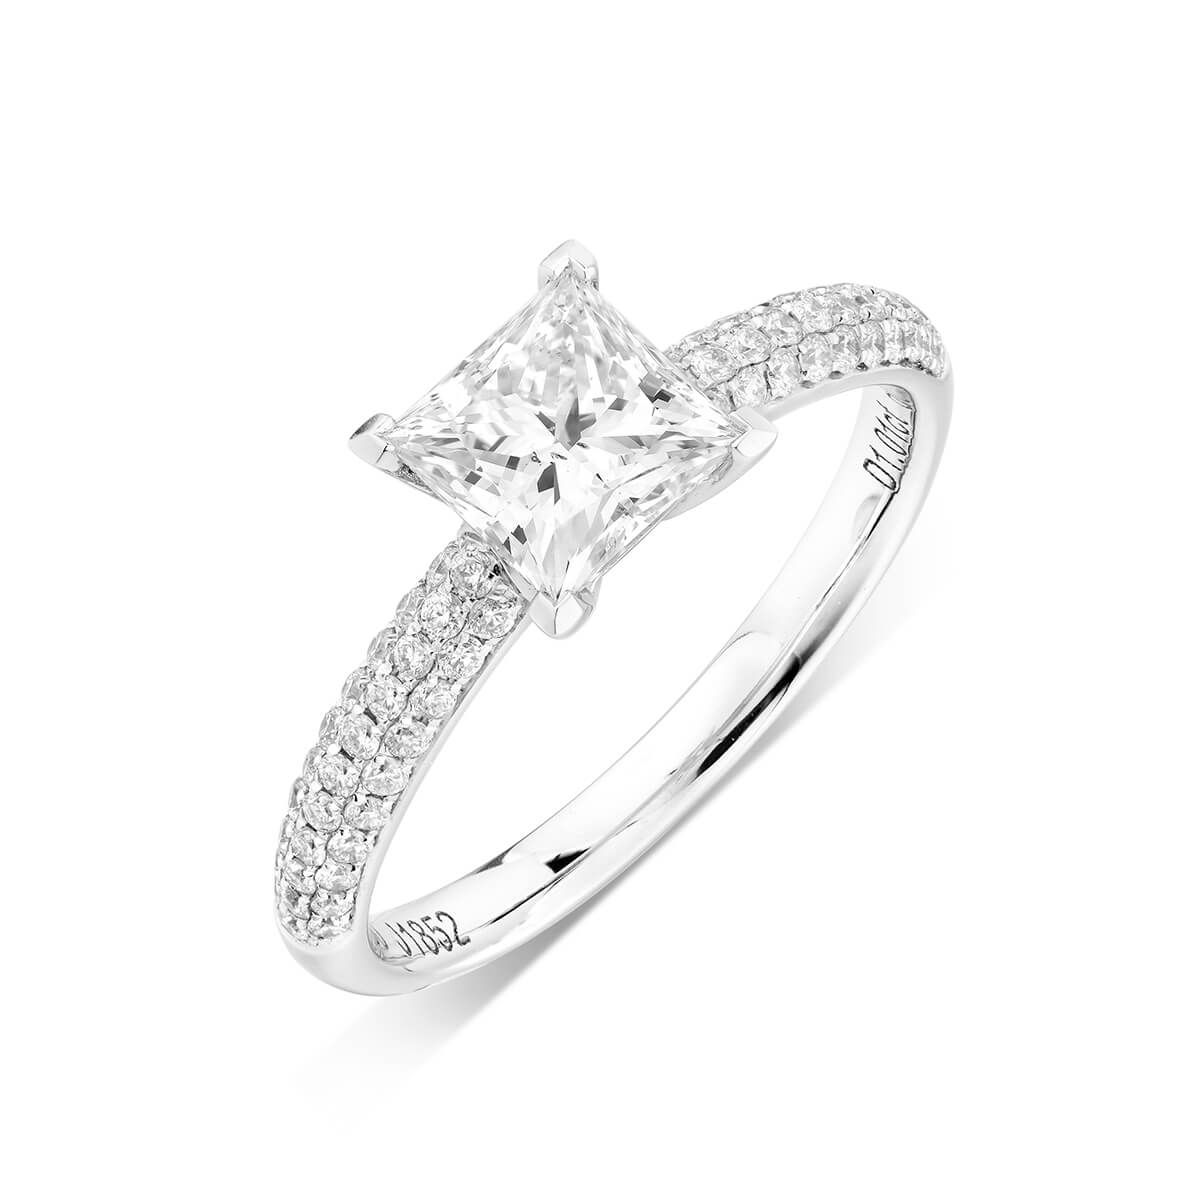  White Diamond Ring, 1.01 Ct. (1.28 Ct. TW), Princess shape, GIA Certified, 5182714629